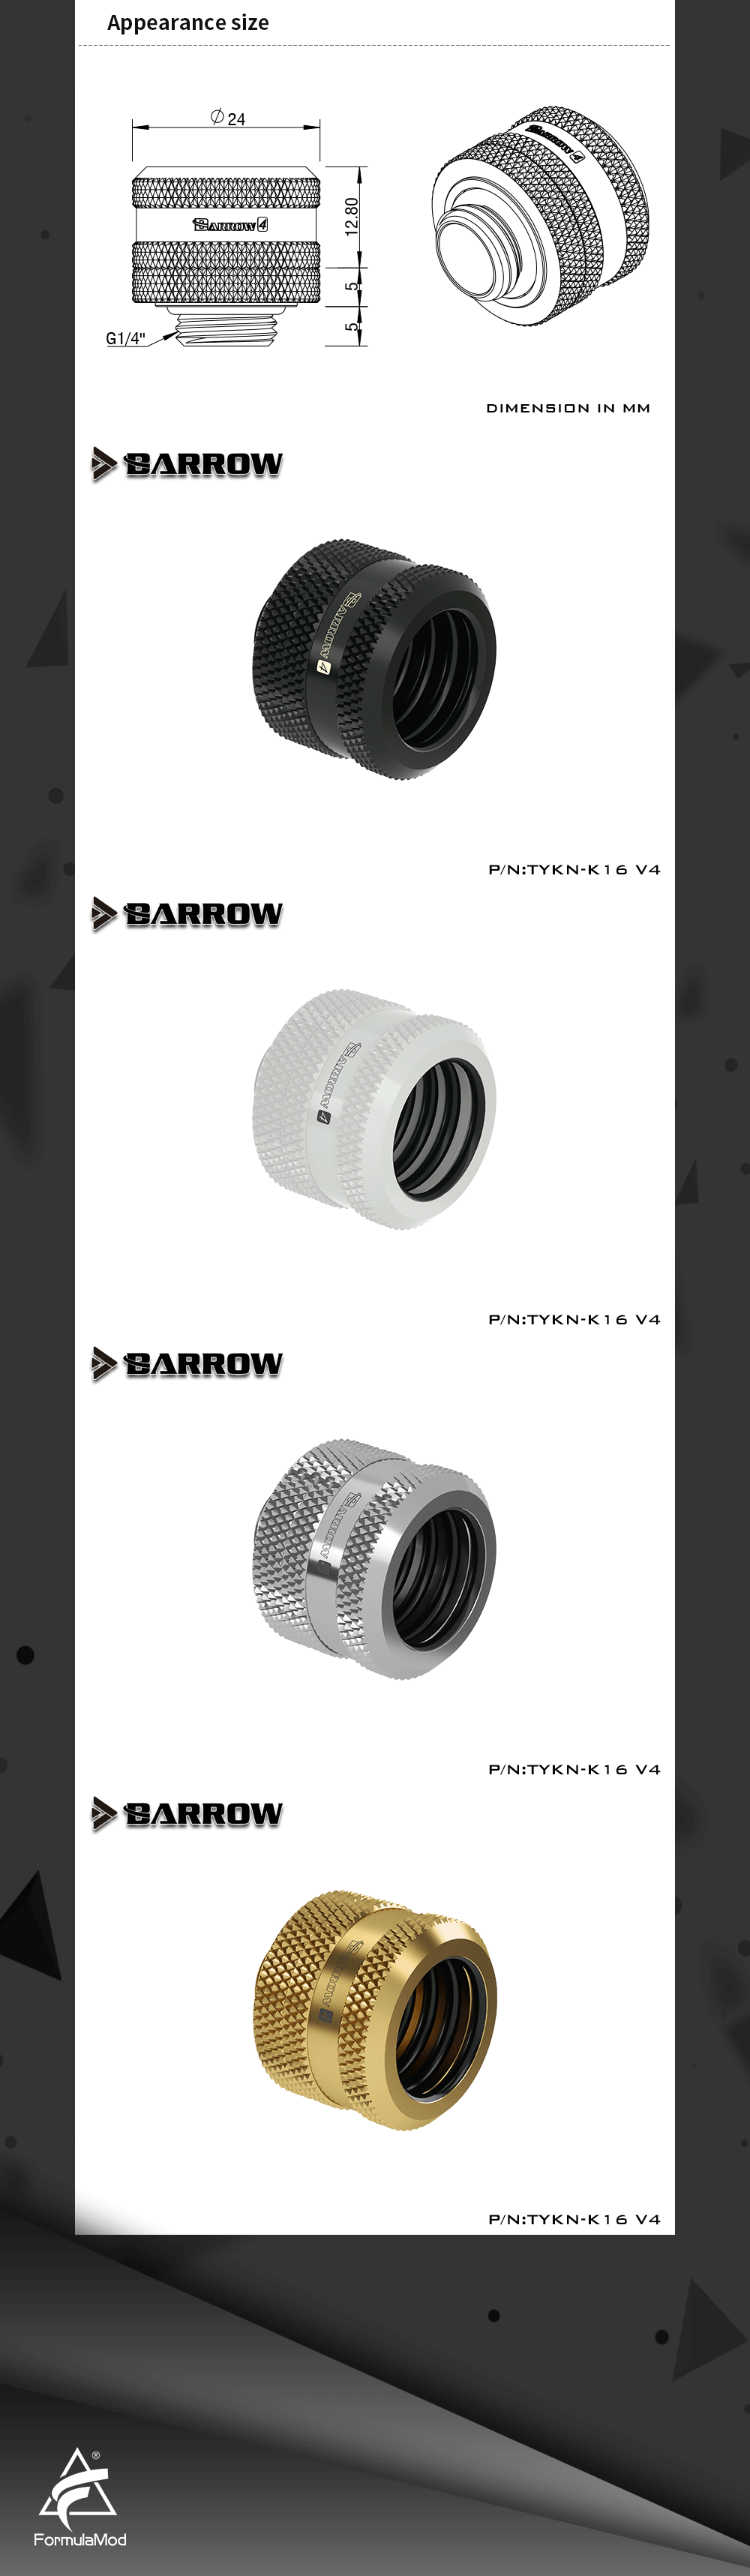 Barrow TYKN-K16V4, OD16mm Hard Tube Fittings, G1/4 Adapters For OD16mm Hard Tubes  